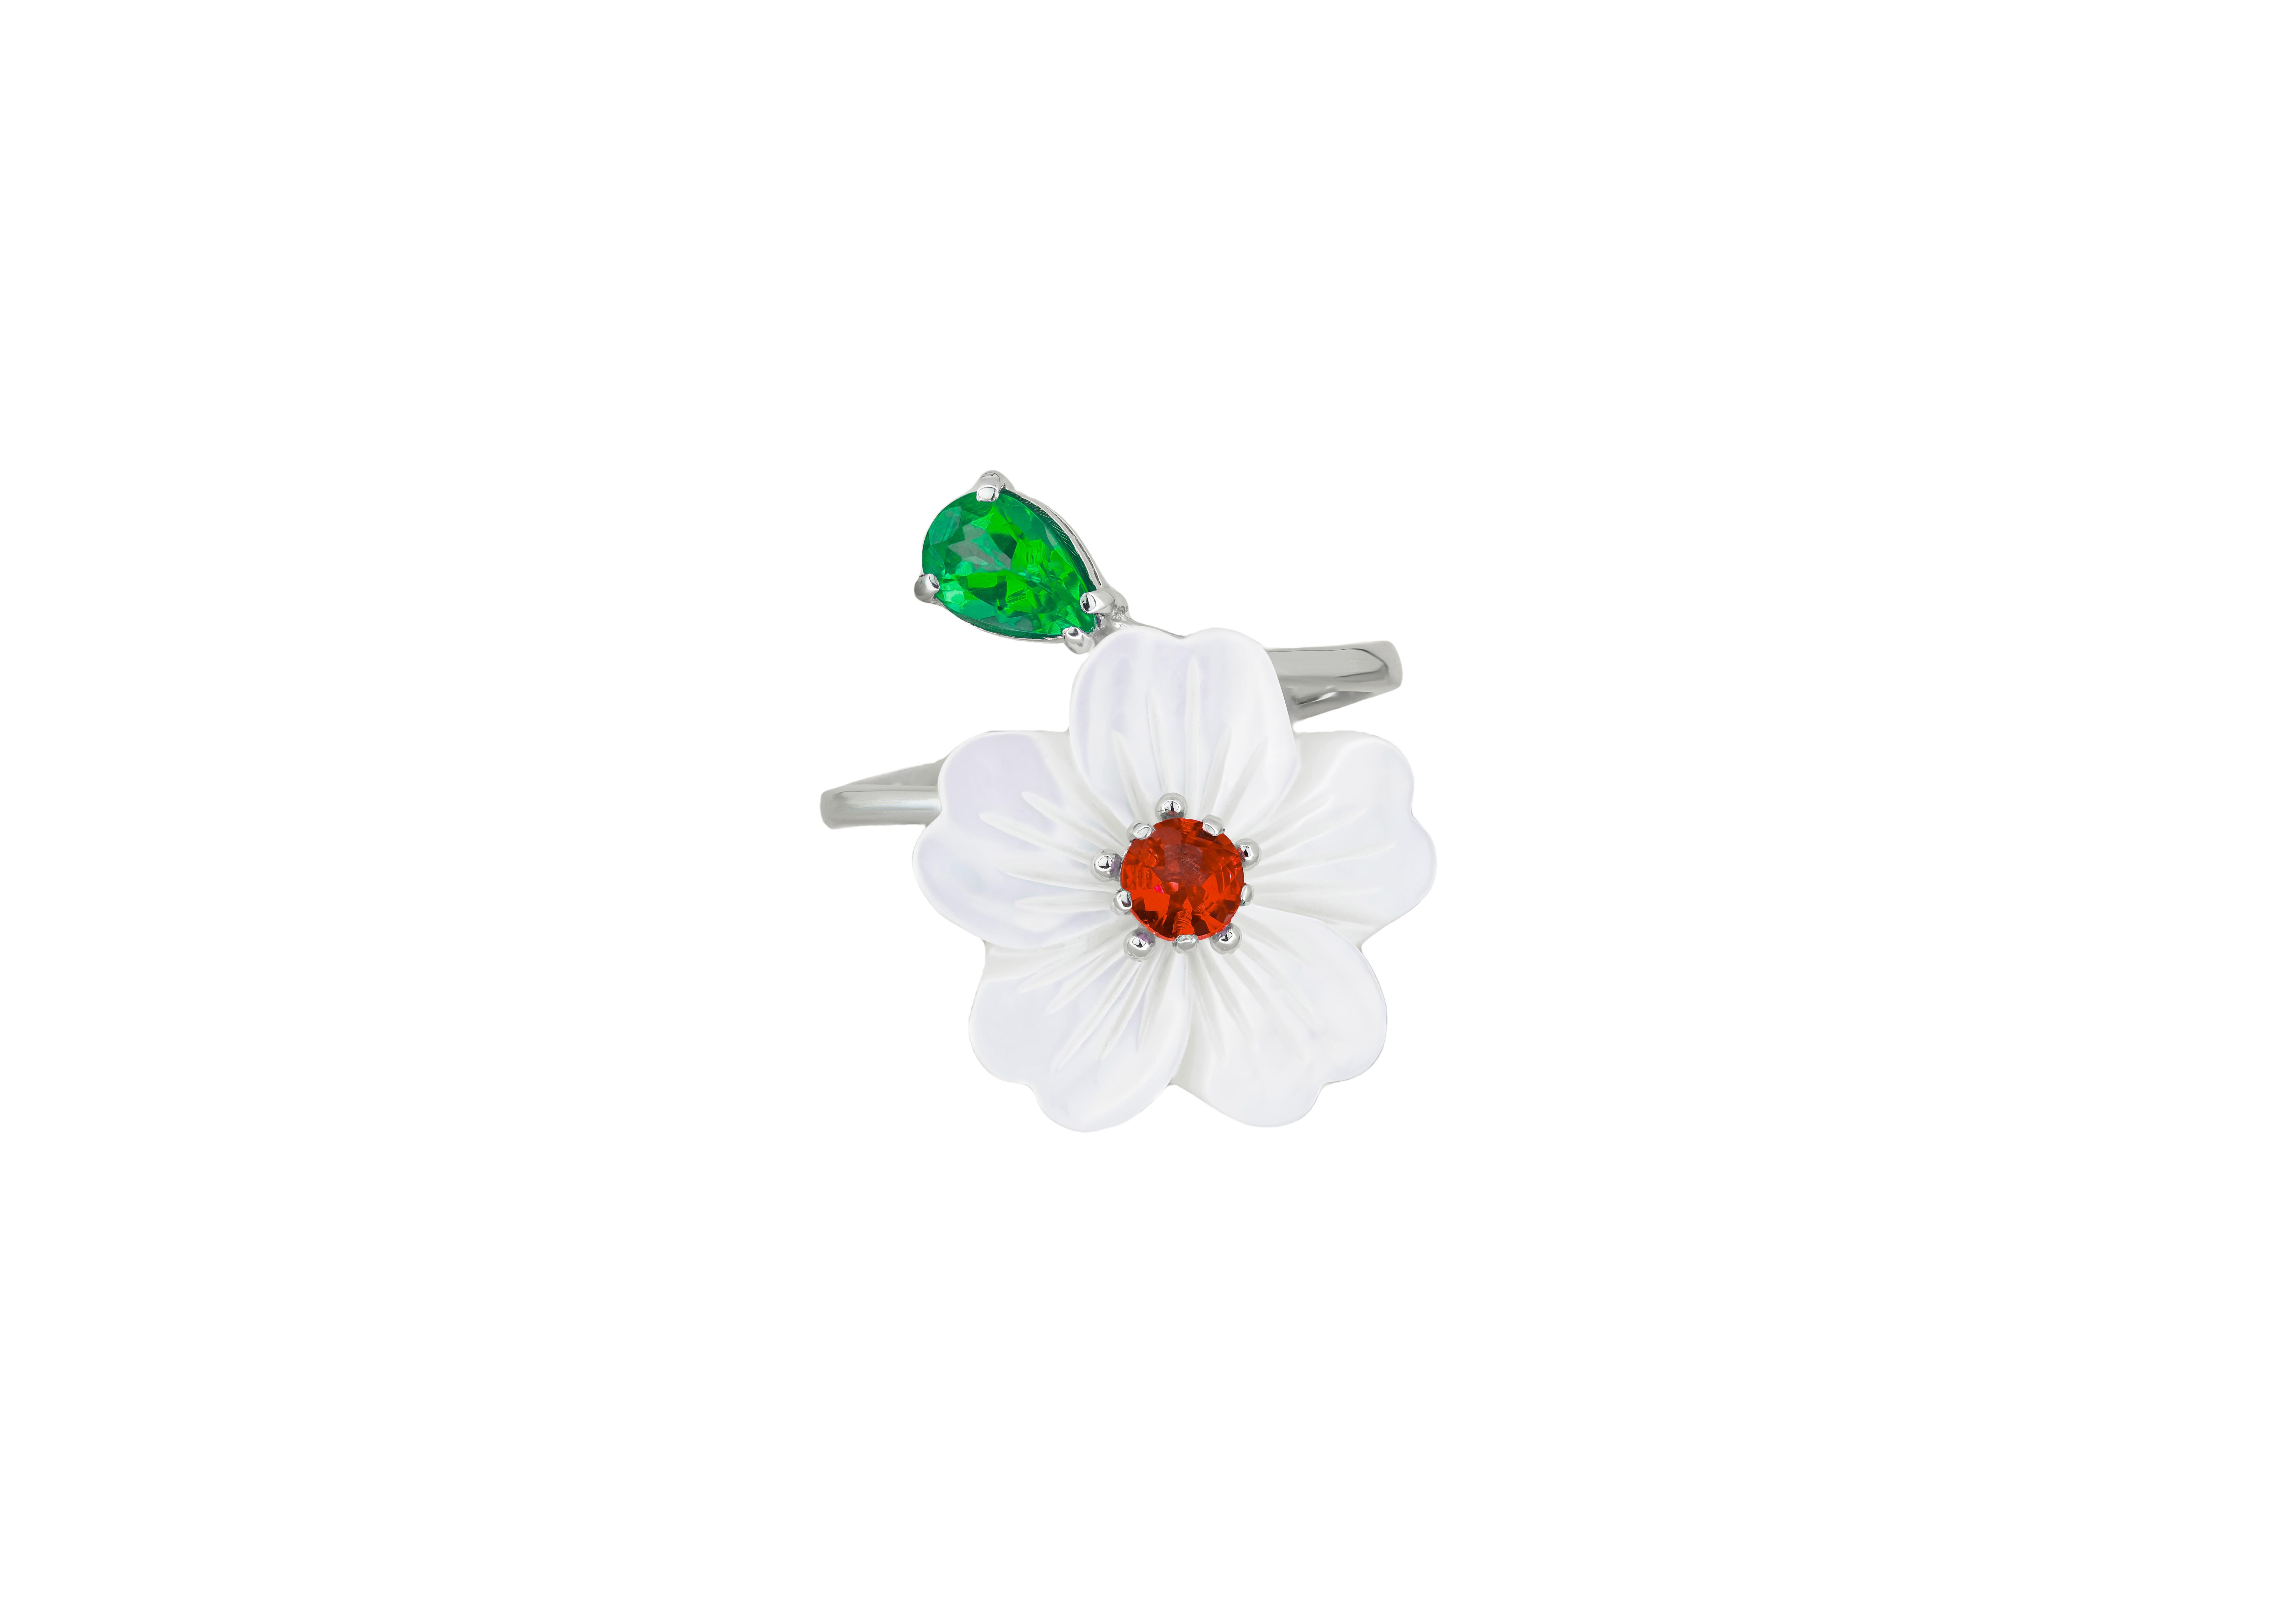 For Sale:  Carved Flower 14k ring with gemstones. 6